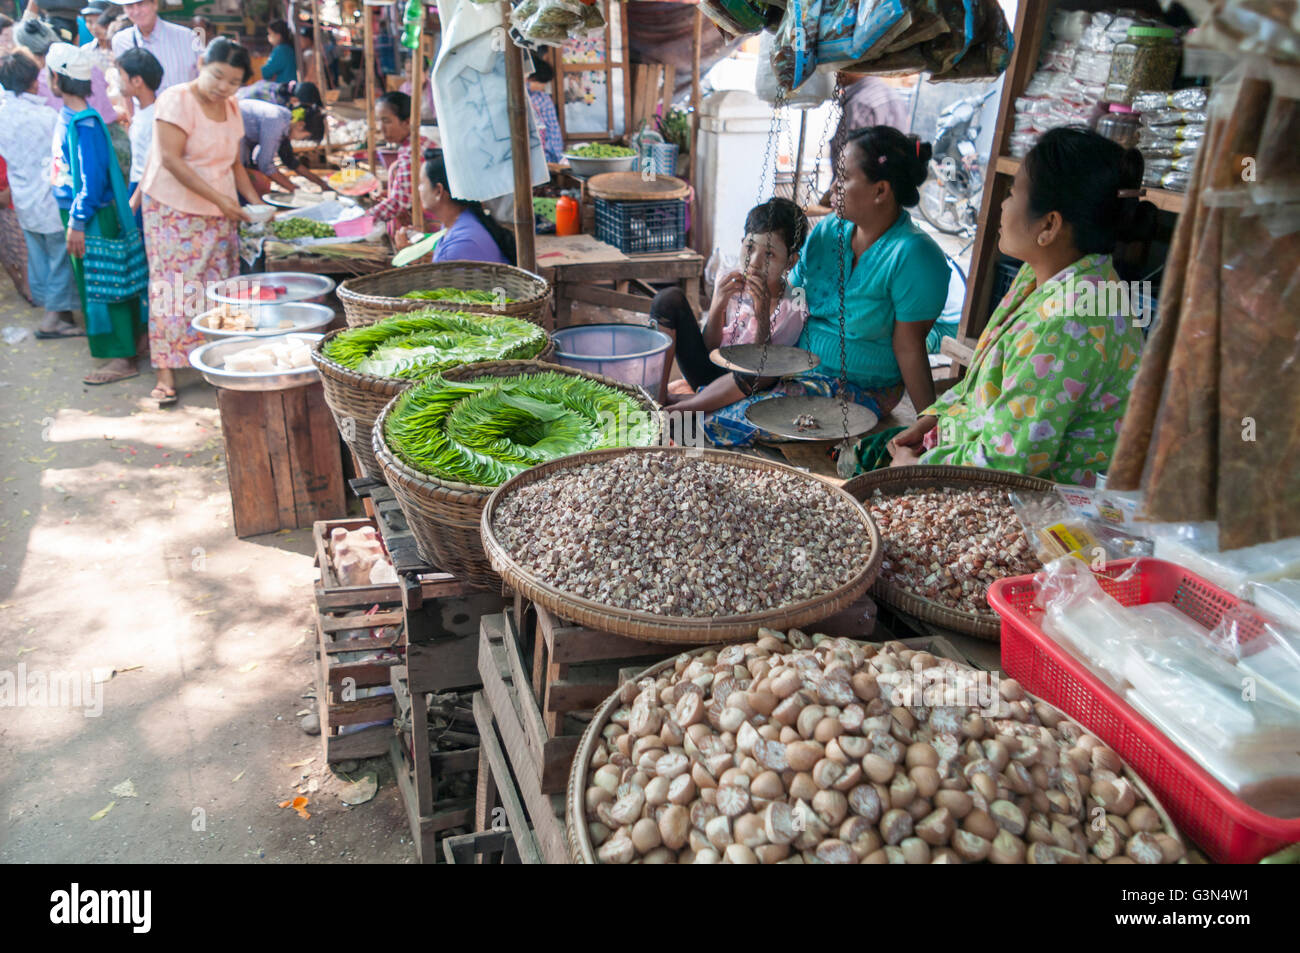 Noci di arec o noci di betel (di noci di arec catecù) e foglie di betel (di piper betle) per la vendita su un mercato a Nyaung U, Myanmar. Foto Stock